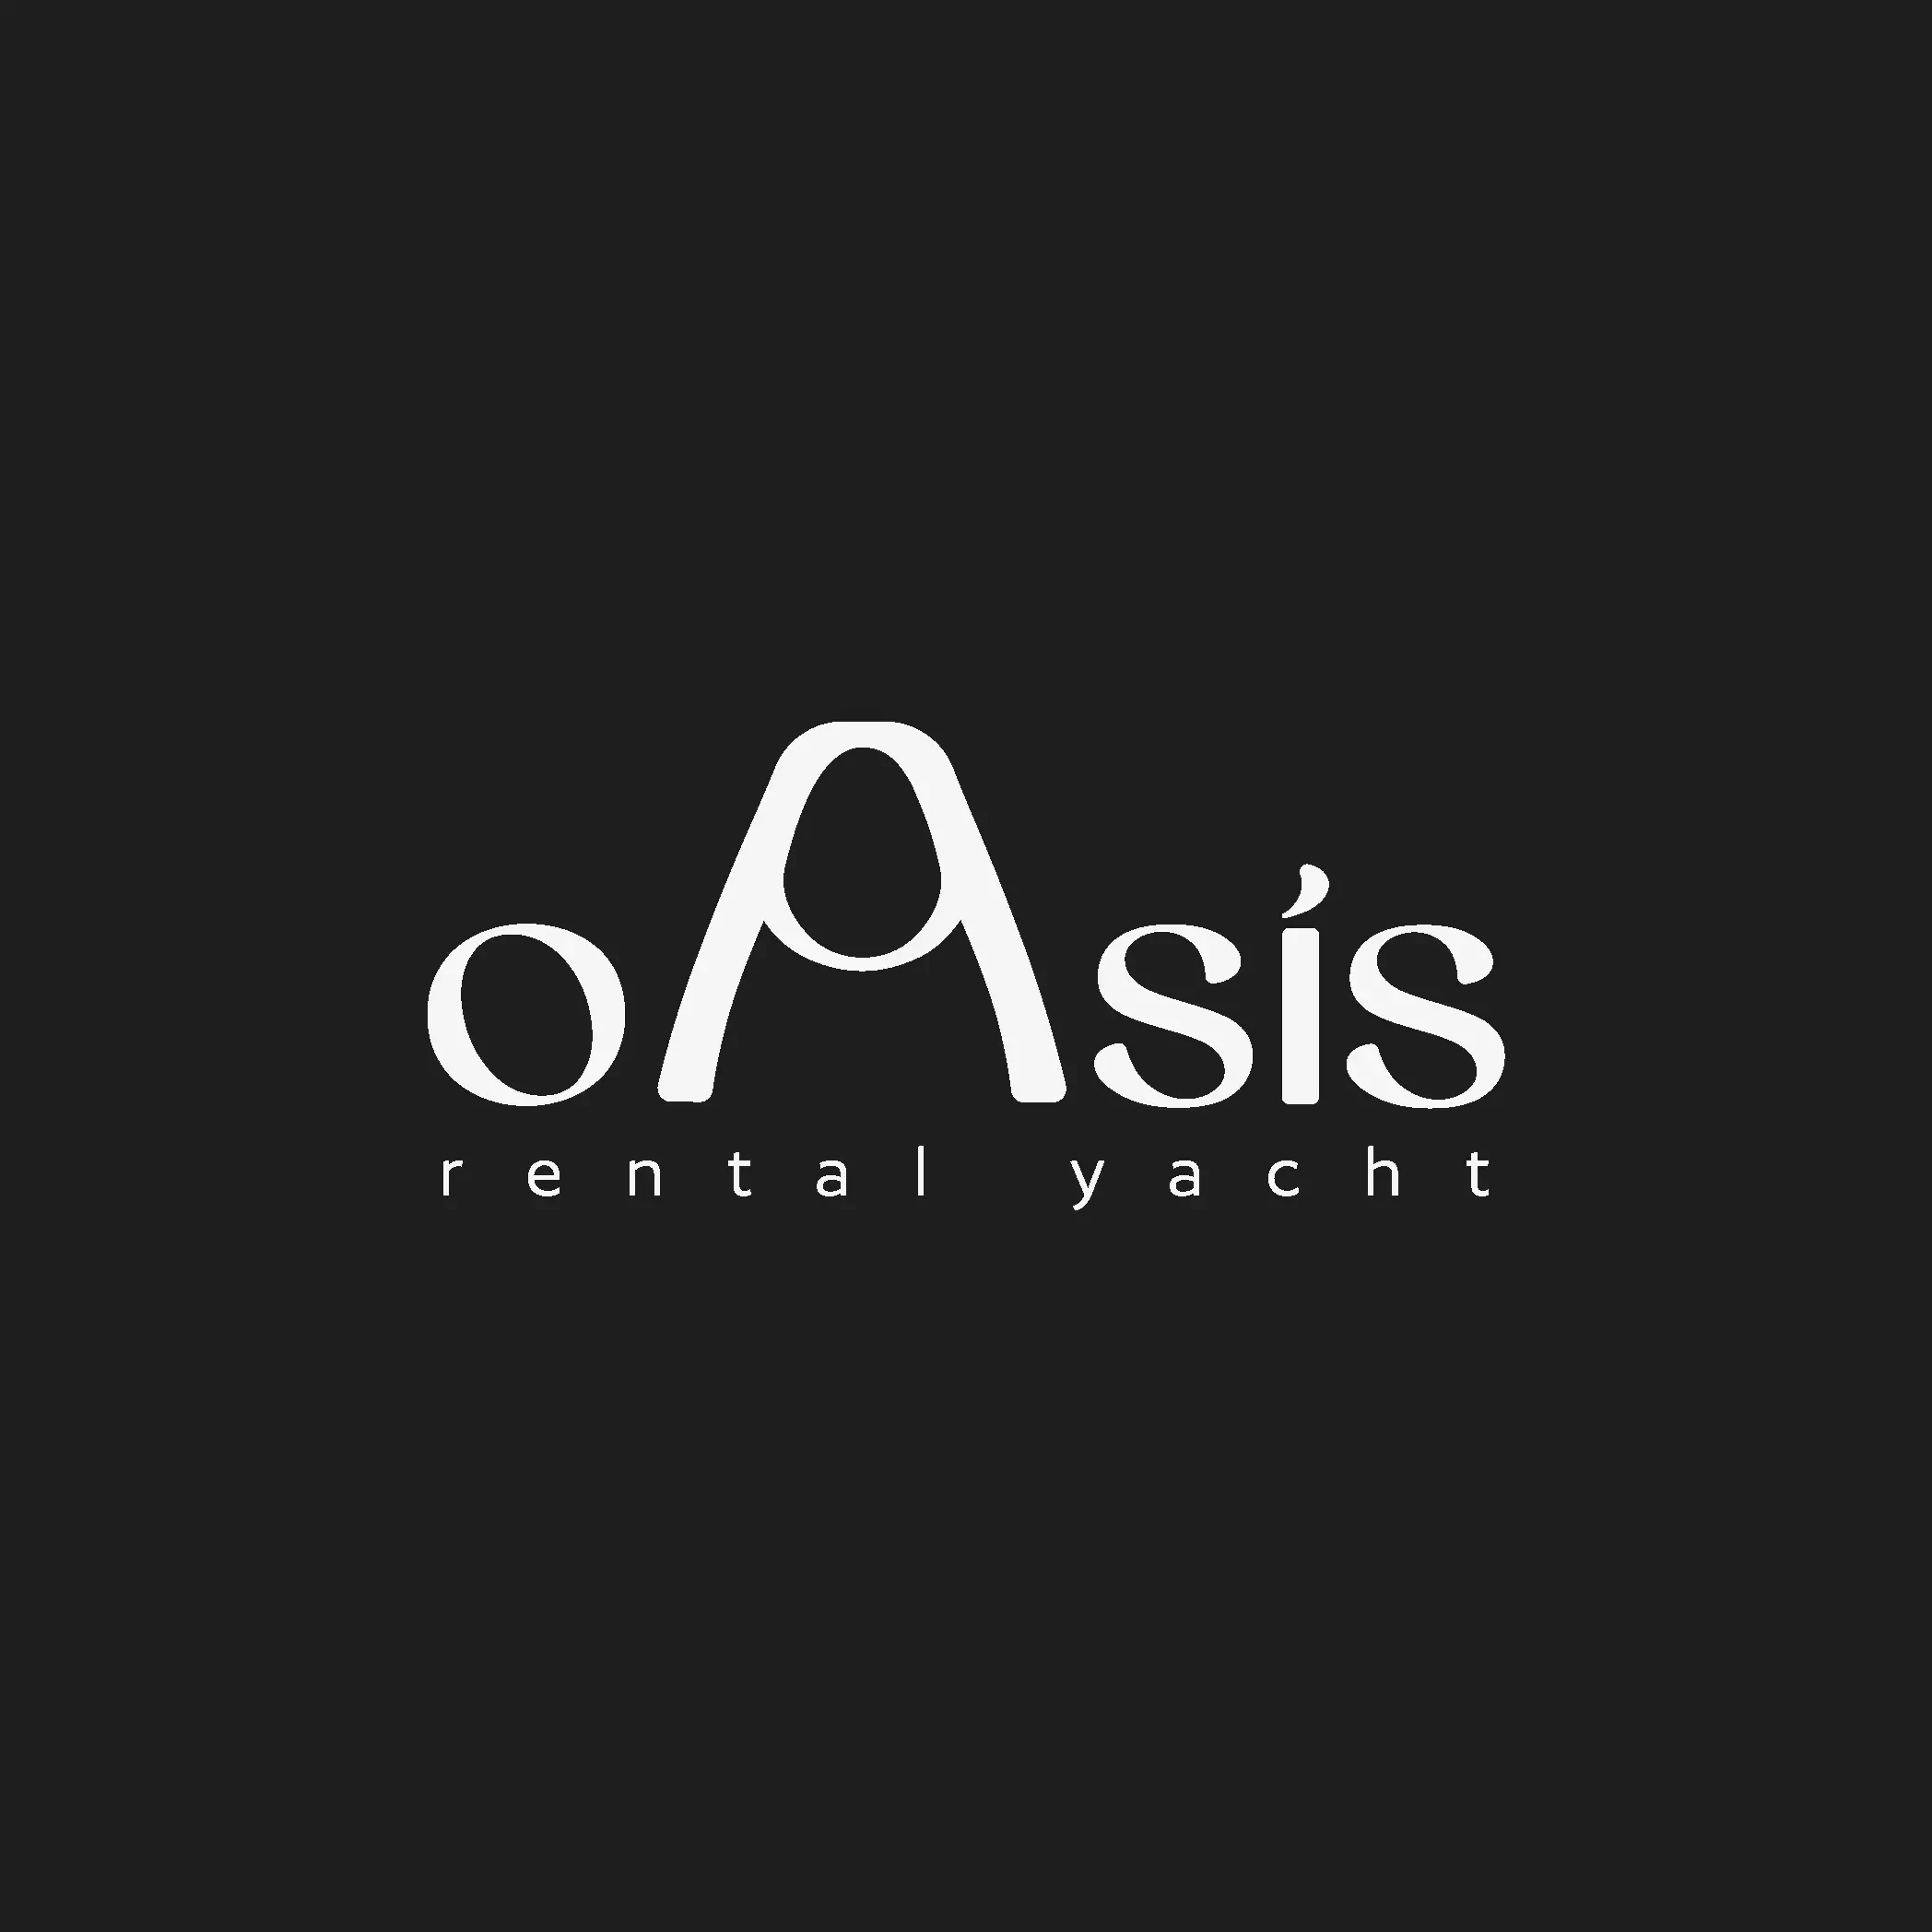 OasisGo-Rental Yacht-brand design presentation. Created by Milena Stanisavljevic, Web and Graphic Designer at miletart.com